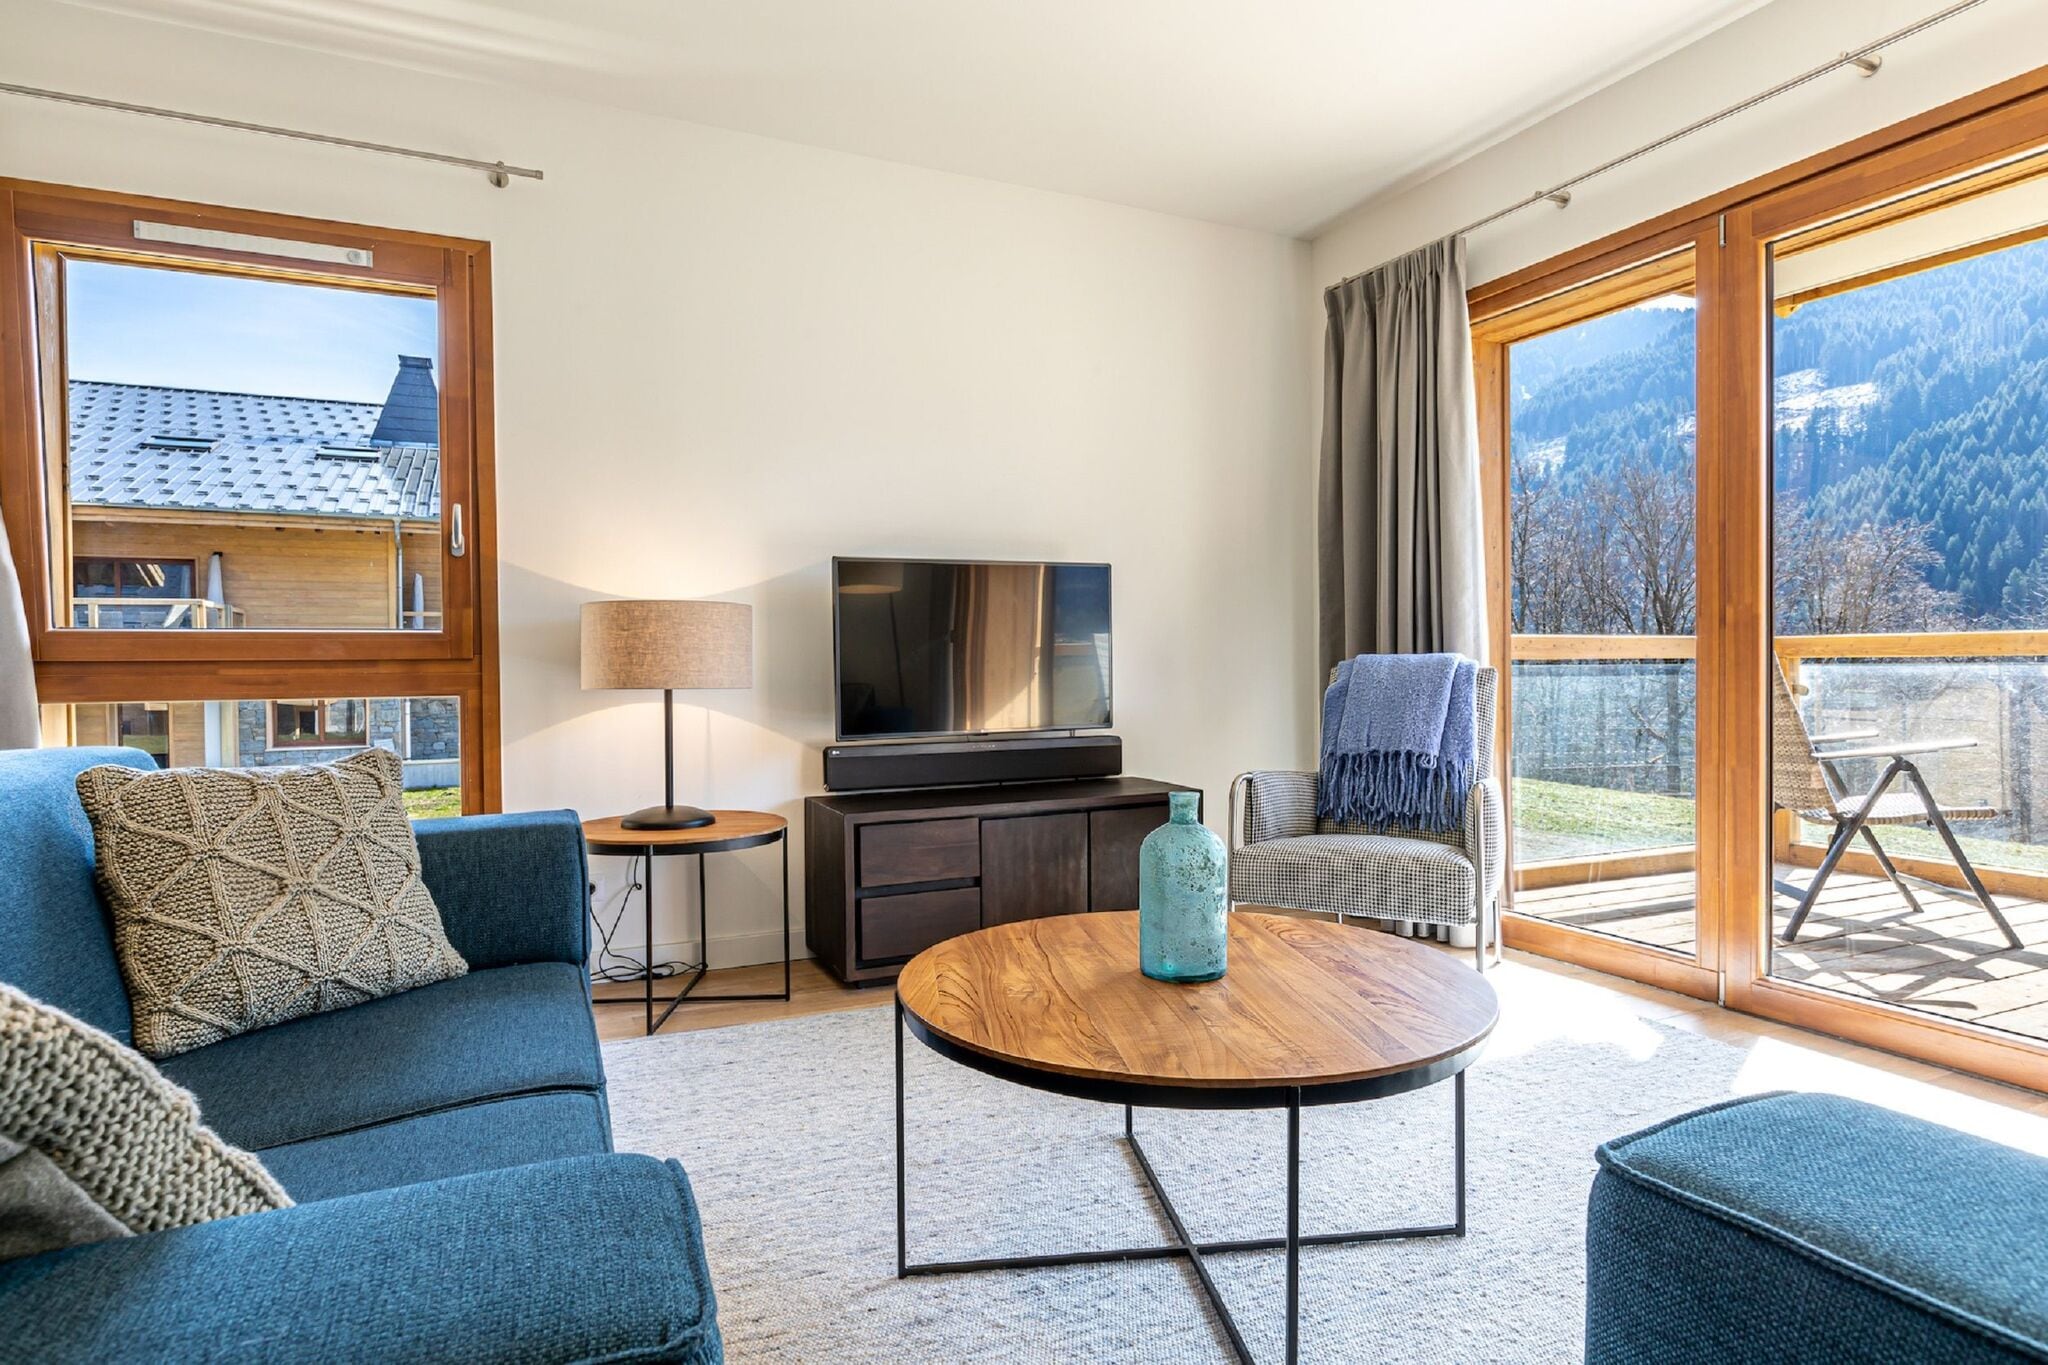 Luxurious apartment in Abondance, ski lift 1.5 km away.